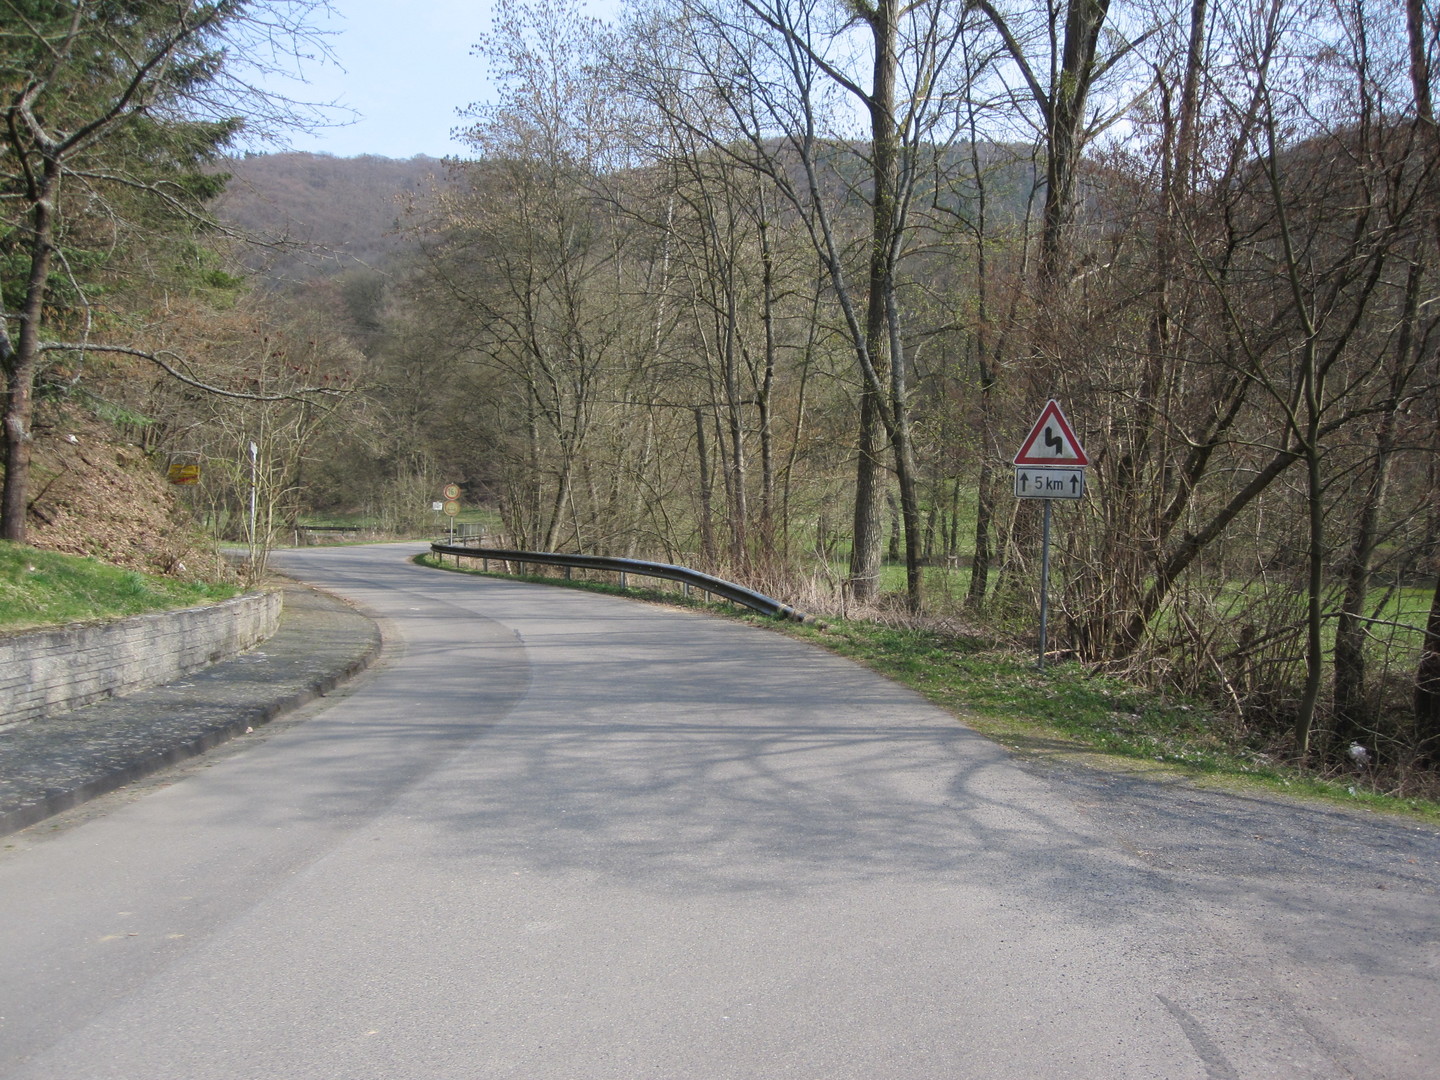 Am Ortsausgang von Niederbreitbach im Fockenbachtal.